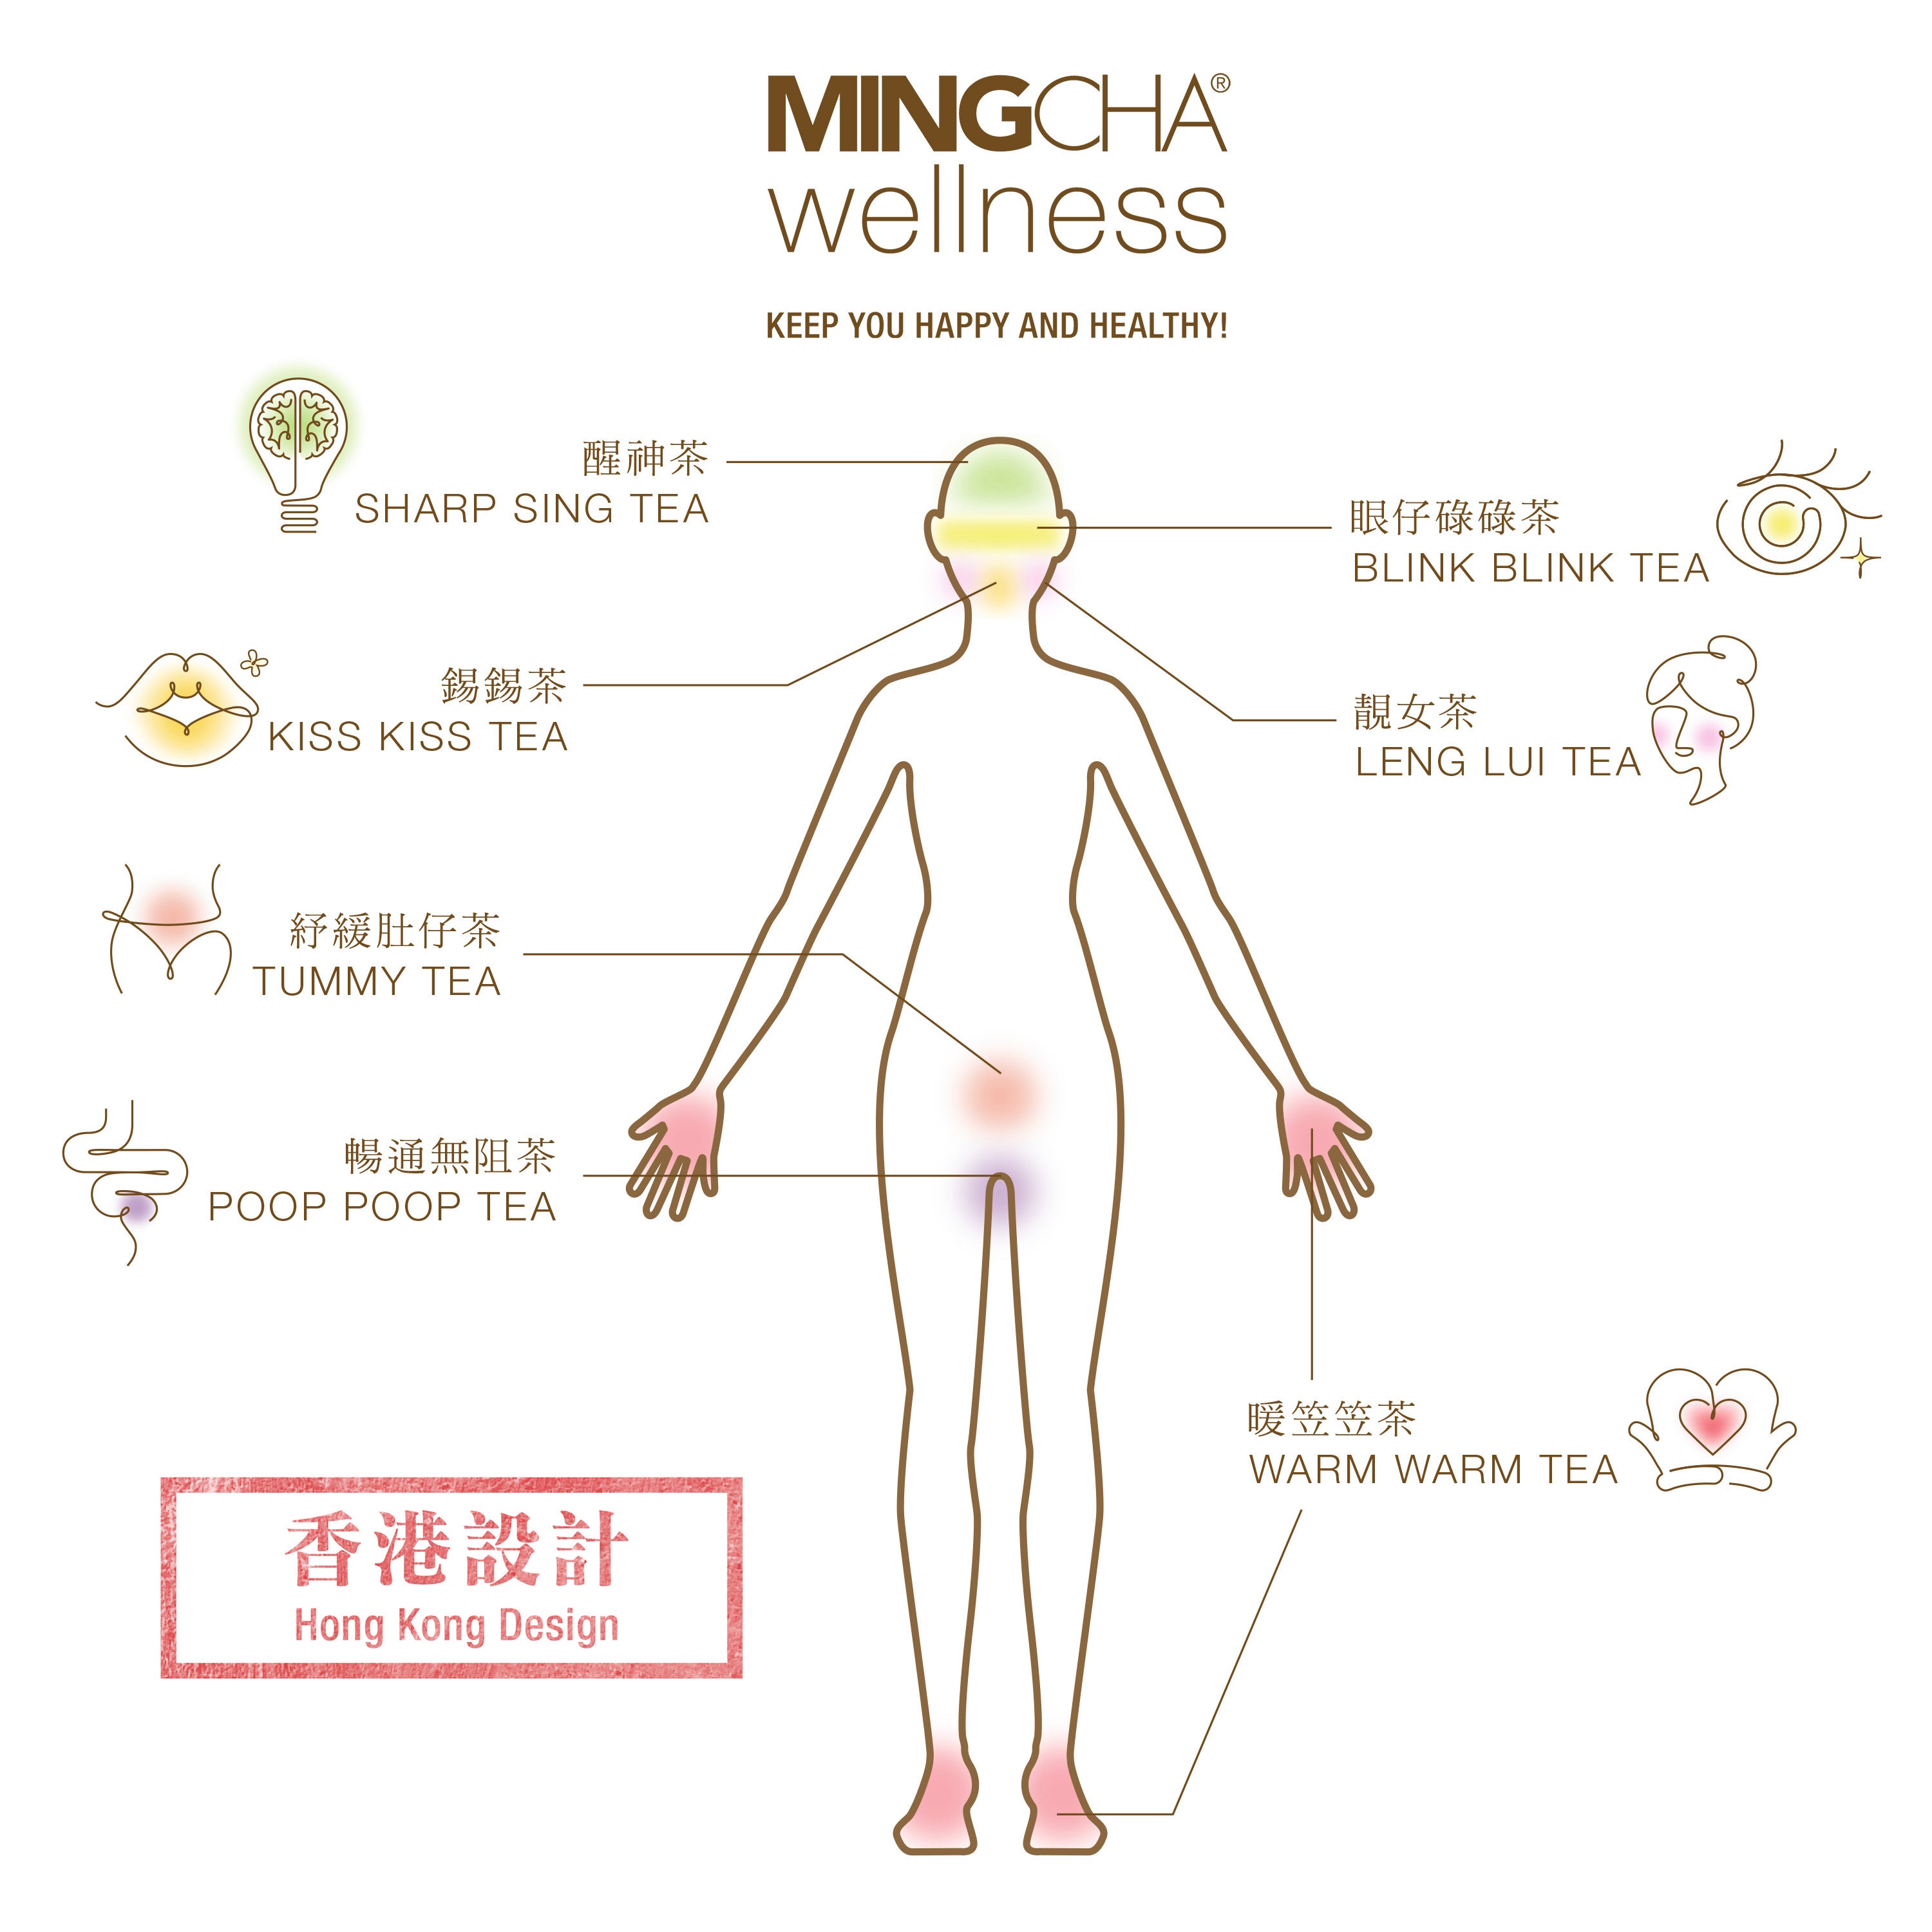 MingCha Wellness, Poop Poop Tea